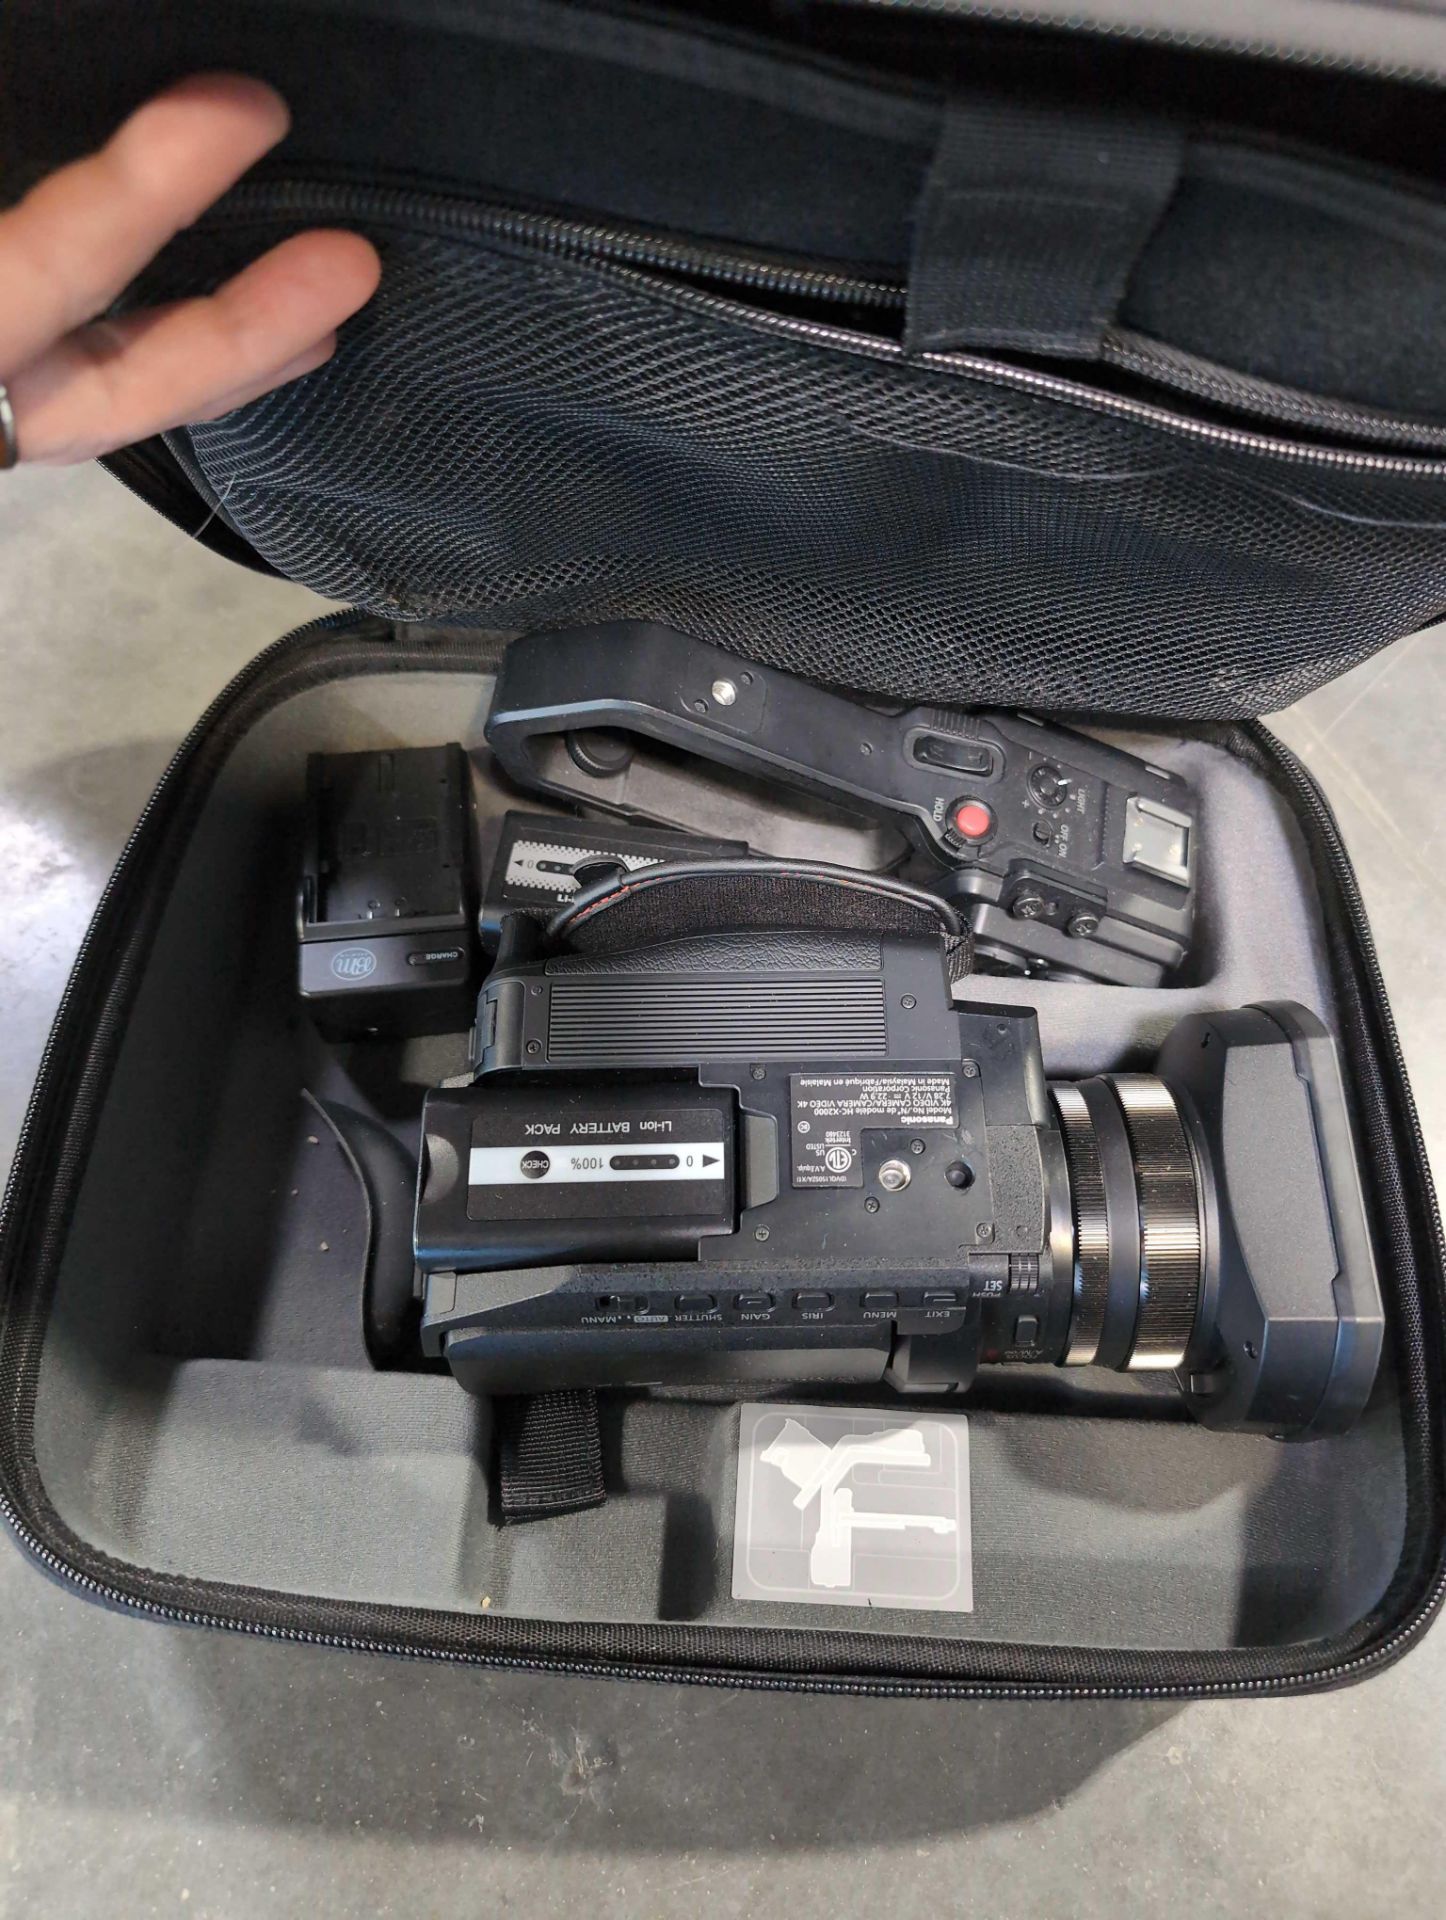 Panasonic 4k video camera - Image 7 of 7